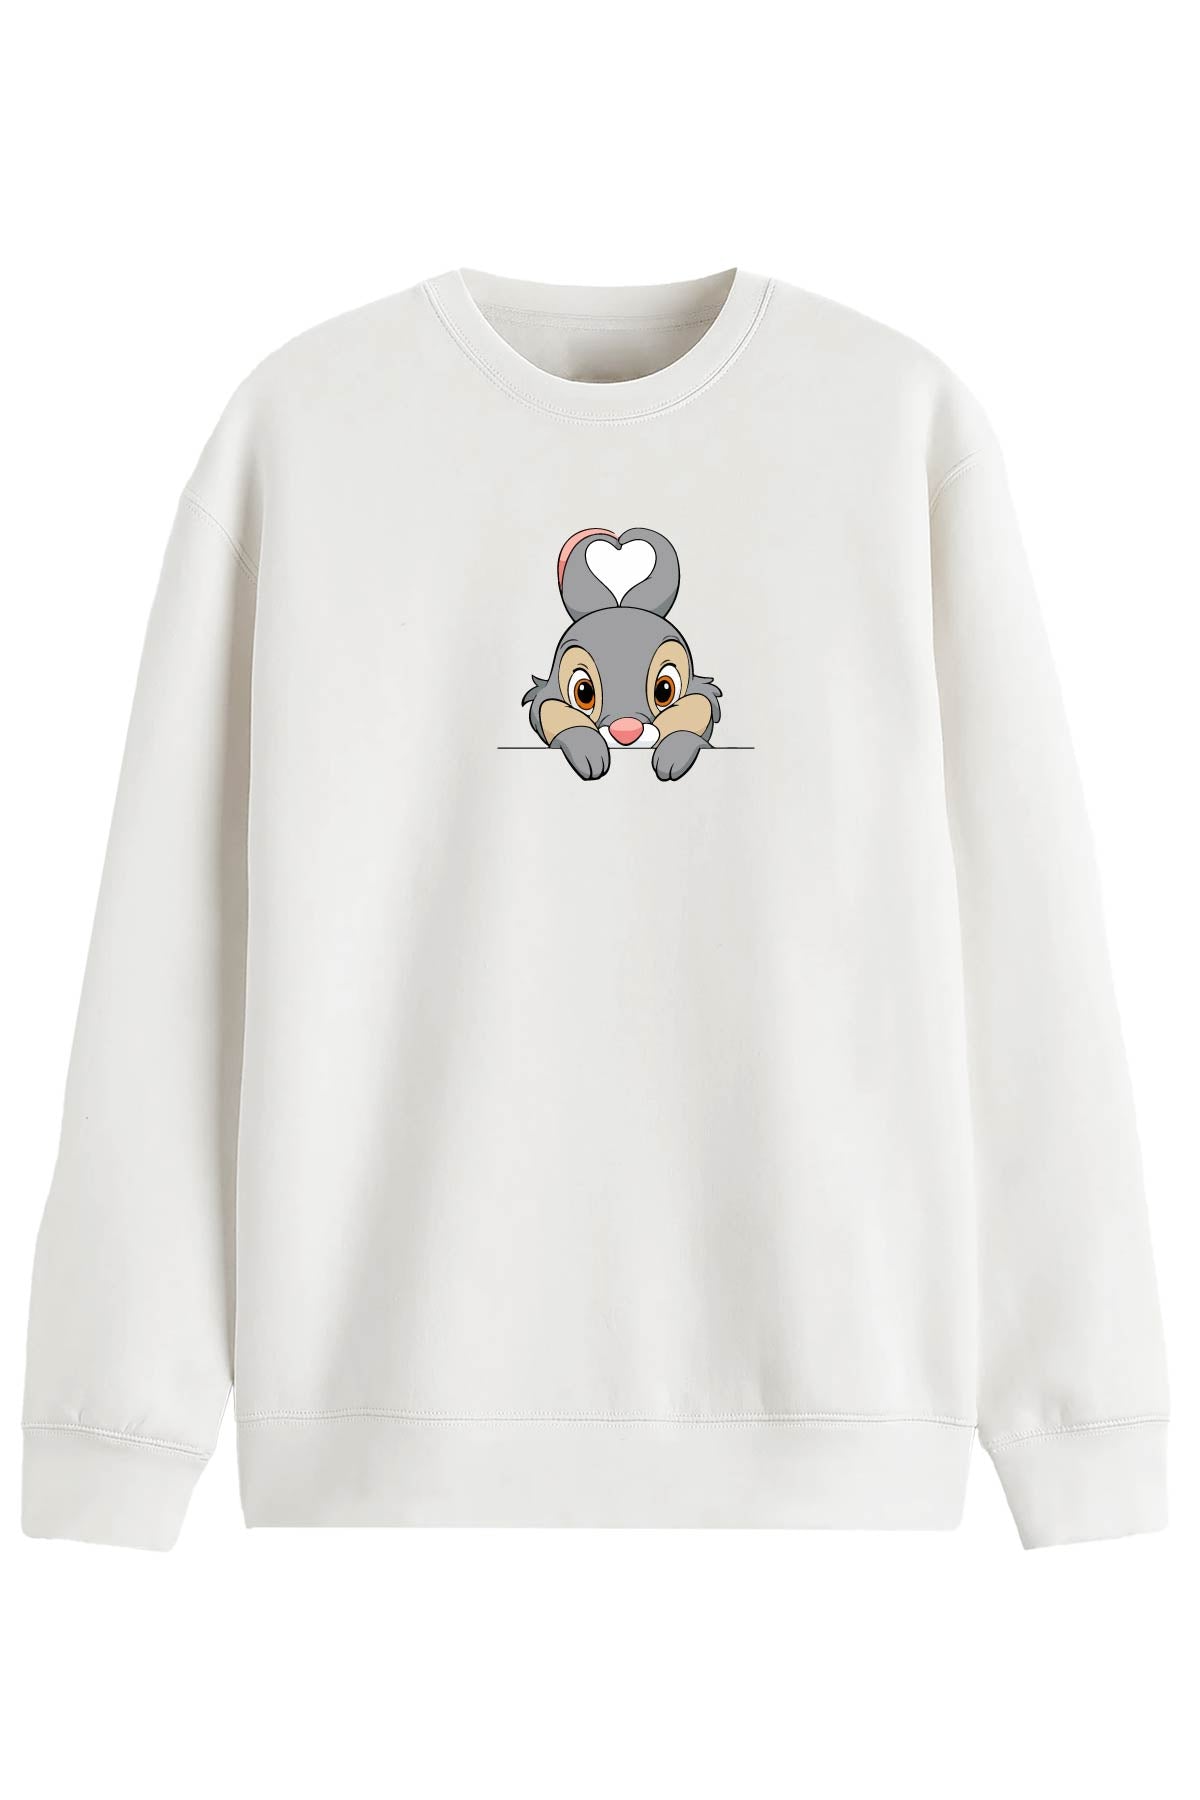 Thumper -  Sweatshirt